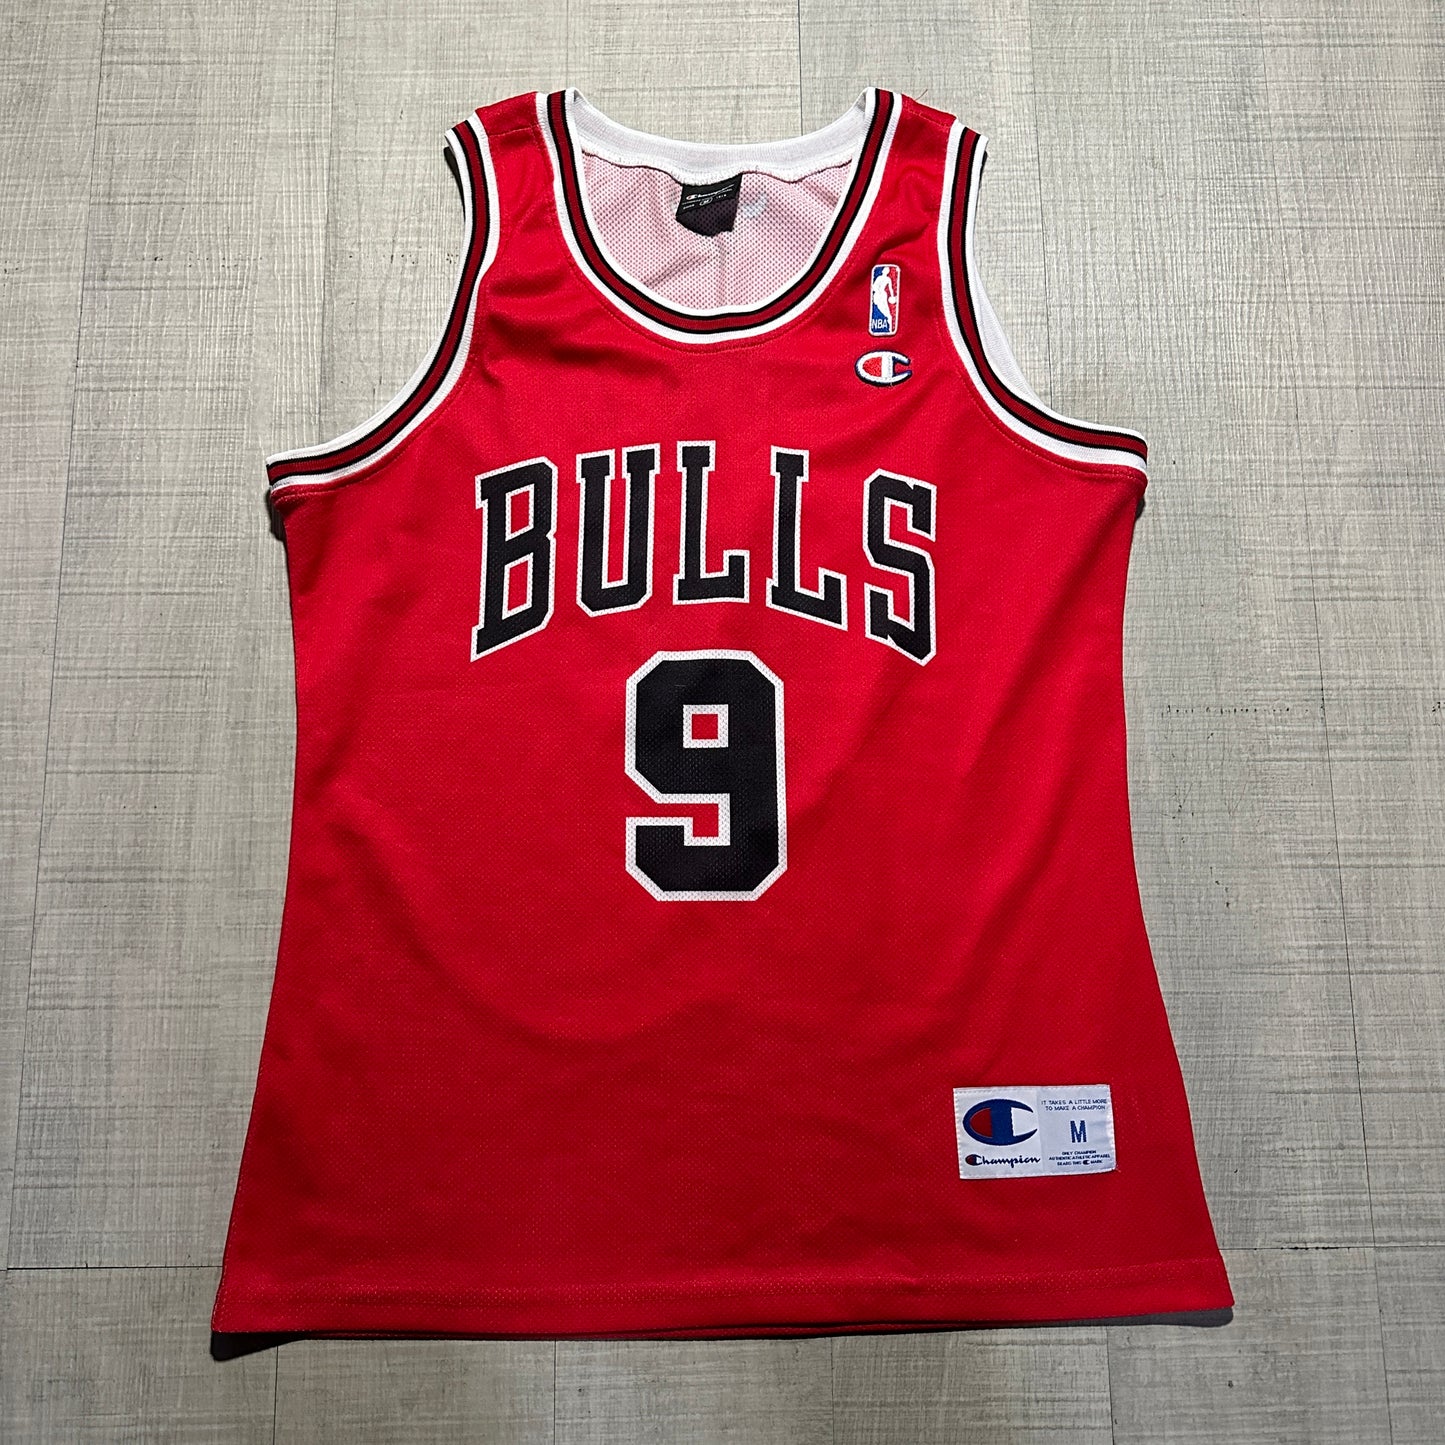 Luol Deng Chicago Bulls Champion Jersey